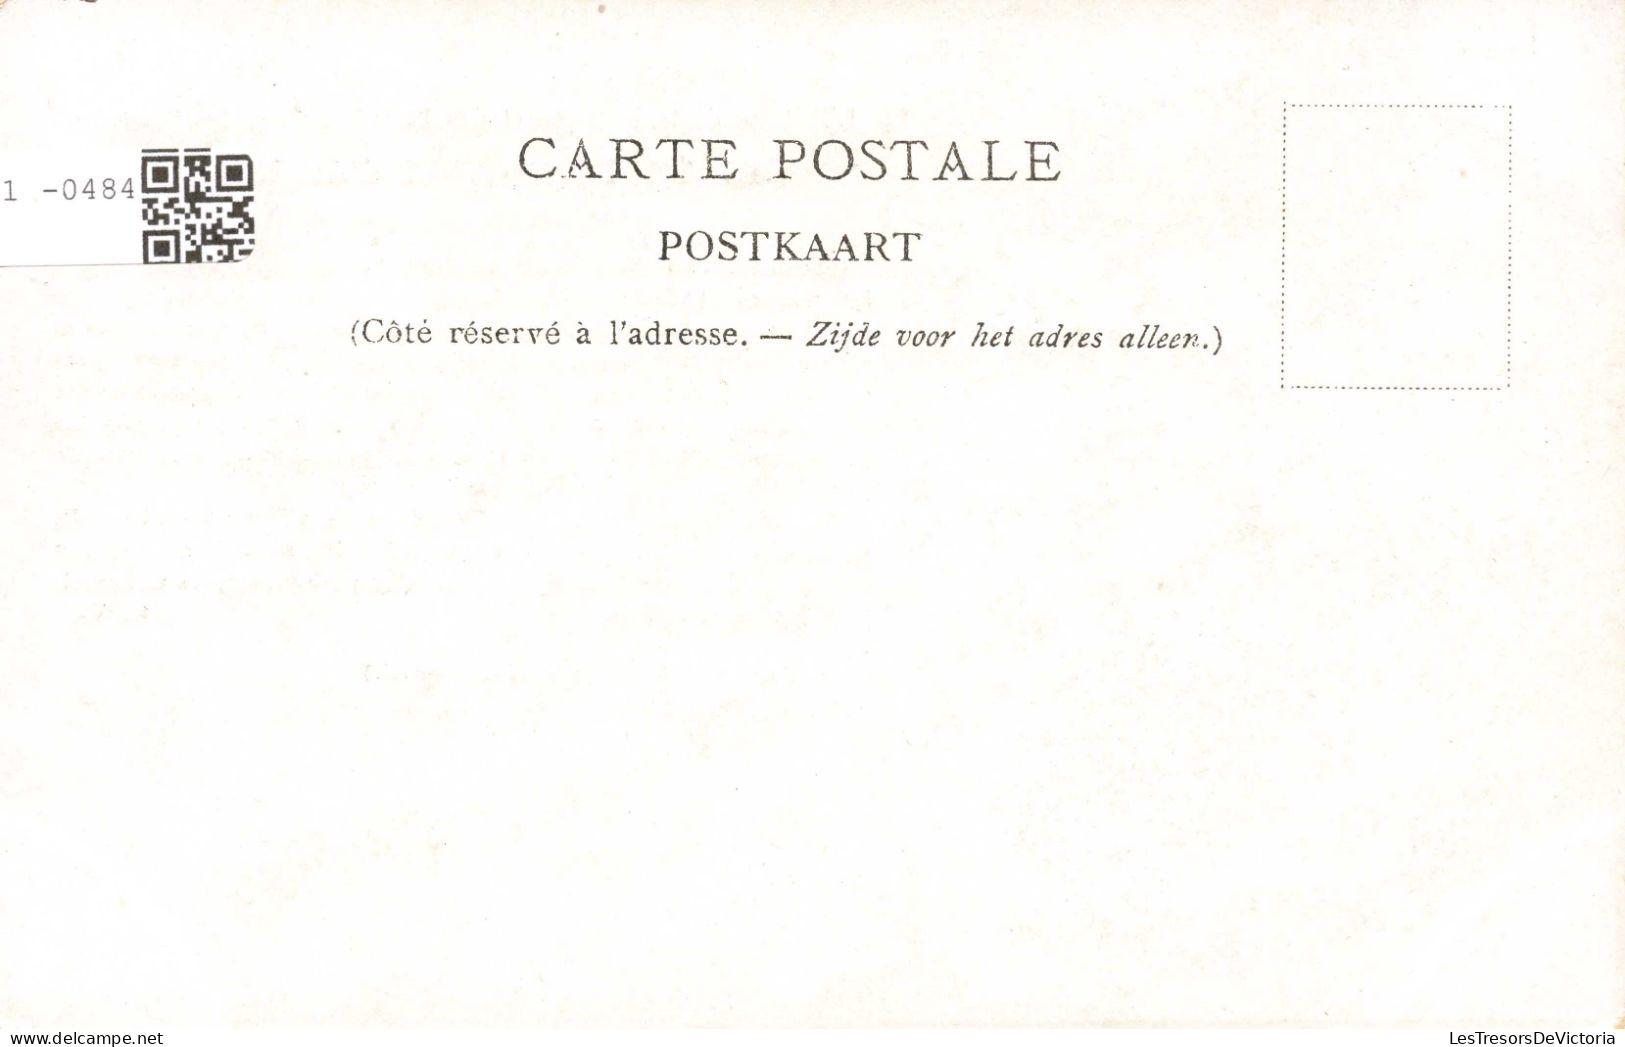 CELEBRITES - Personnages Historiques - Charles 1er - Roi D'Angleterre - Carte Postale Ancienne - Uomini Politici E Militari